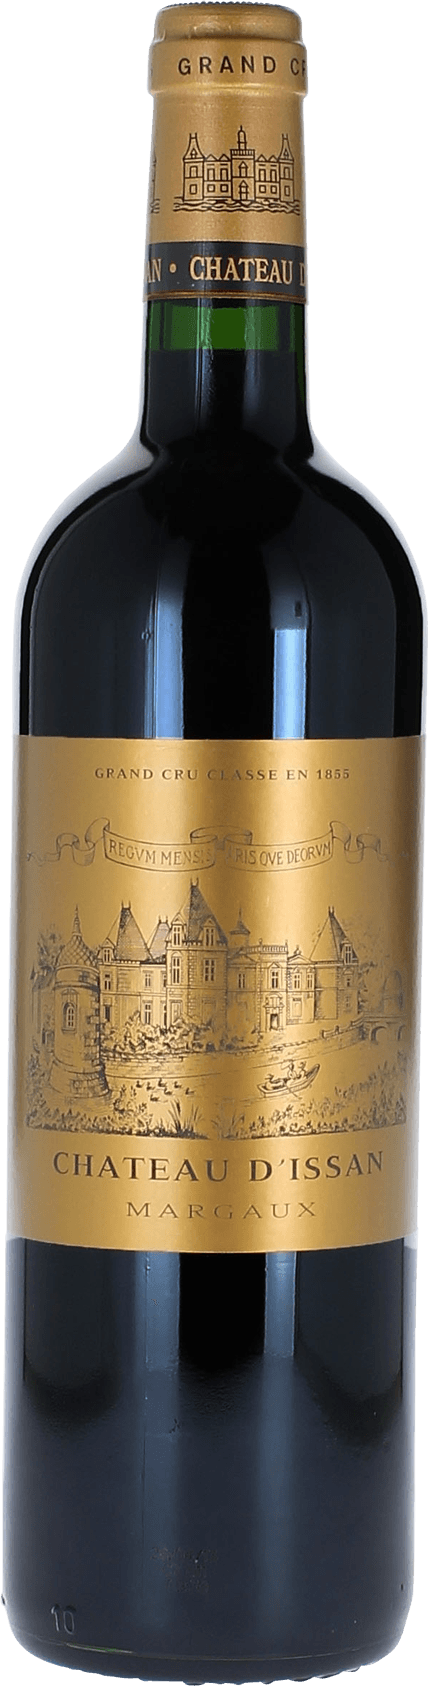 Issan 2019 3me Grand cru class Margaux, Bordeaux rouge